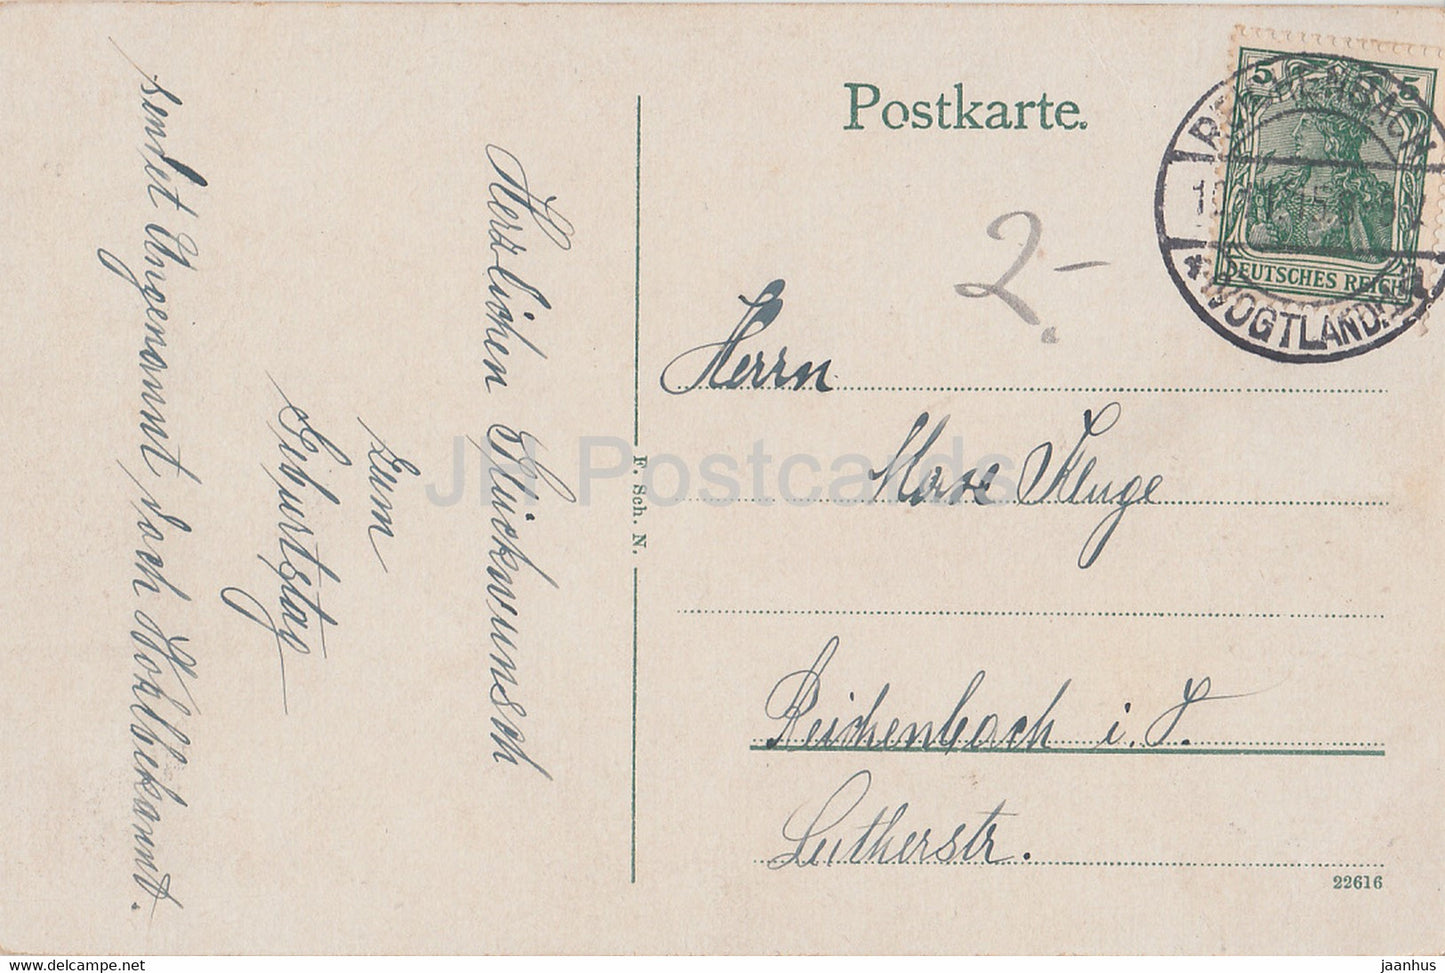 Nurnberg - Bratwurstglocklein - old car - Nuremberg - old postcard - 1915 - Germany - used